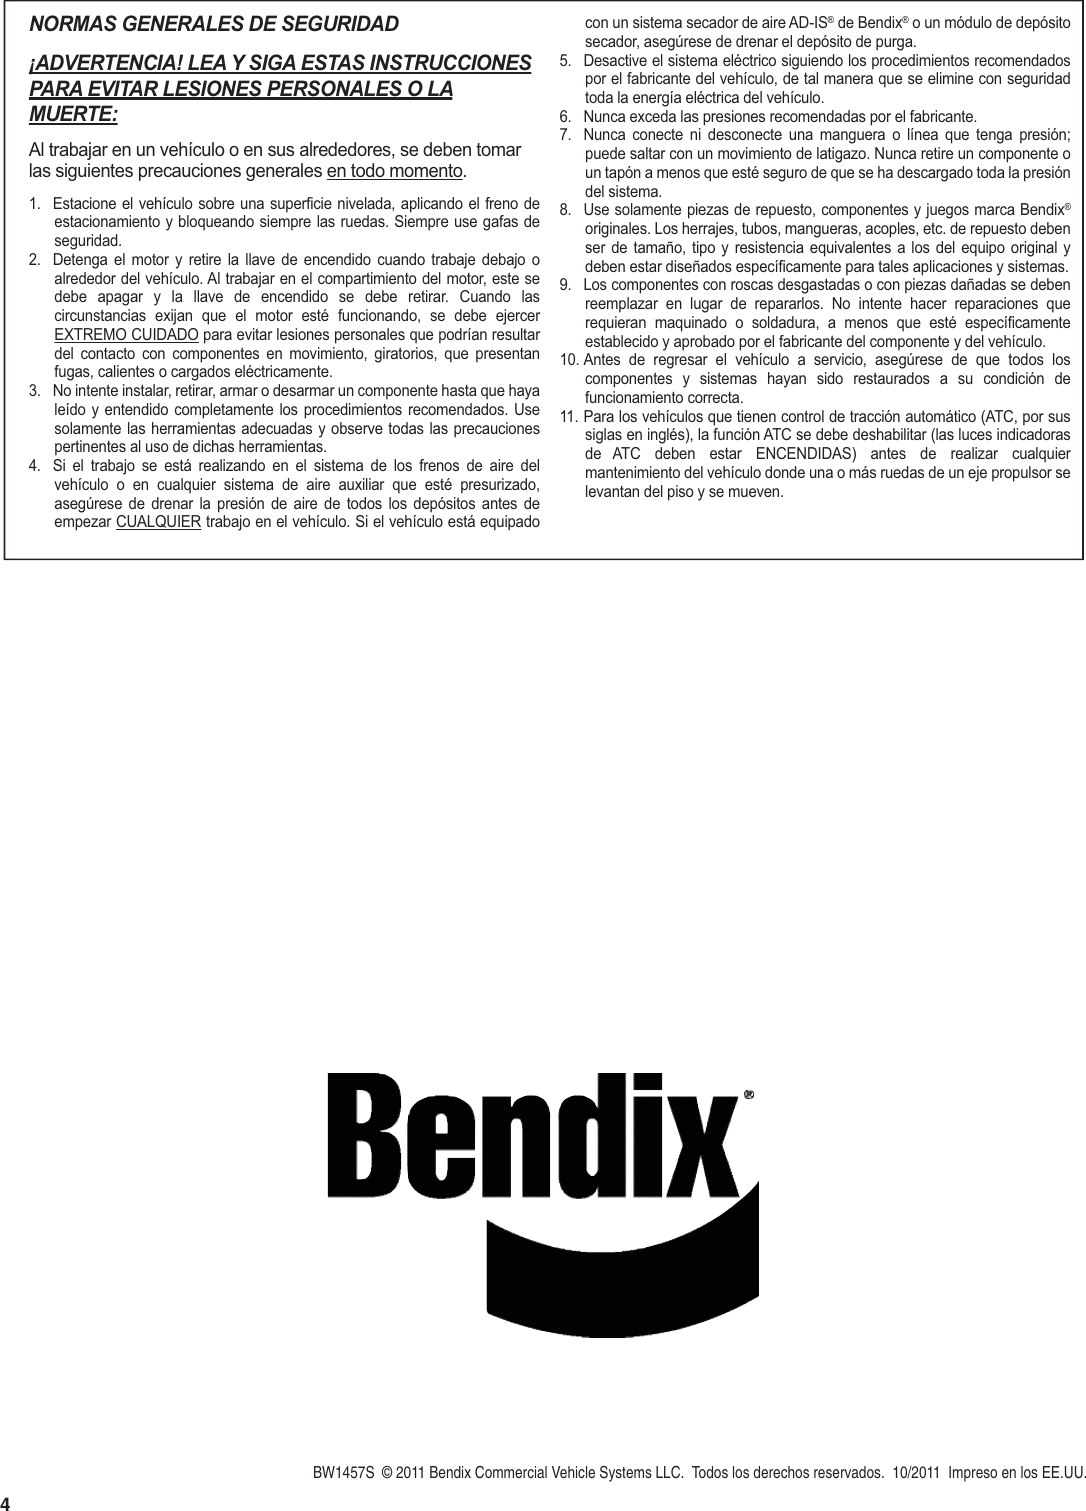 Page 4 of 4 - Bendix Bendix-Bw1457S-Users-Manual- 110927_Bendix_SD-03-2501f  Updated_SpaUv- Bendix-bw1457s-users-manual